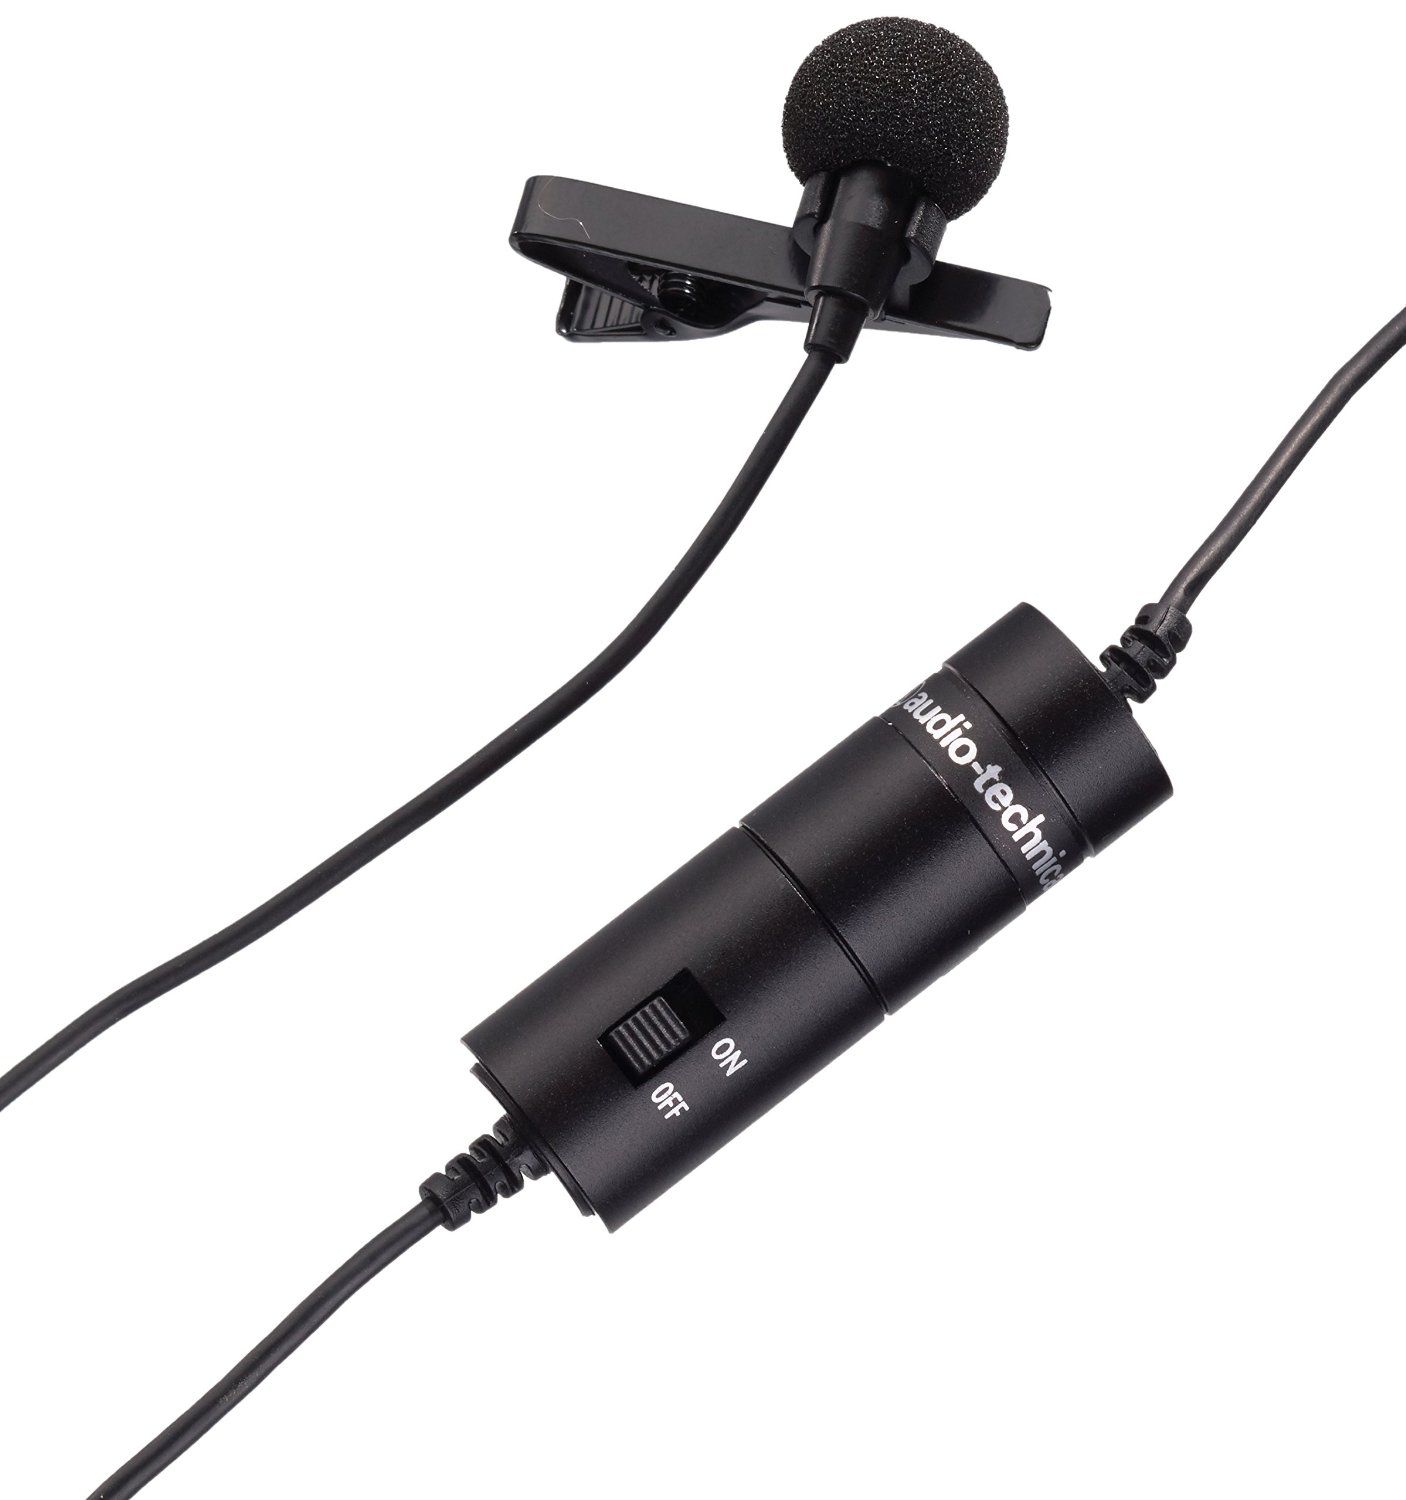 Kit Fone + Microfone de lapela + adaptador para celular | Superlux - Audio Technica | HD681 - ATR3350IS